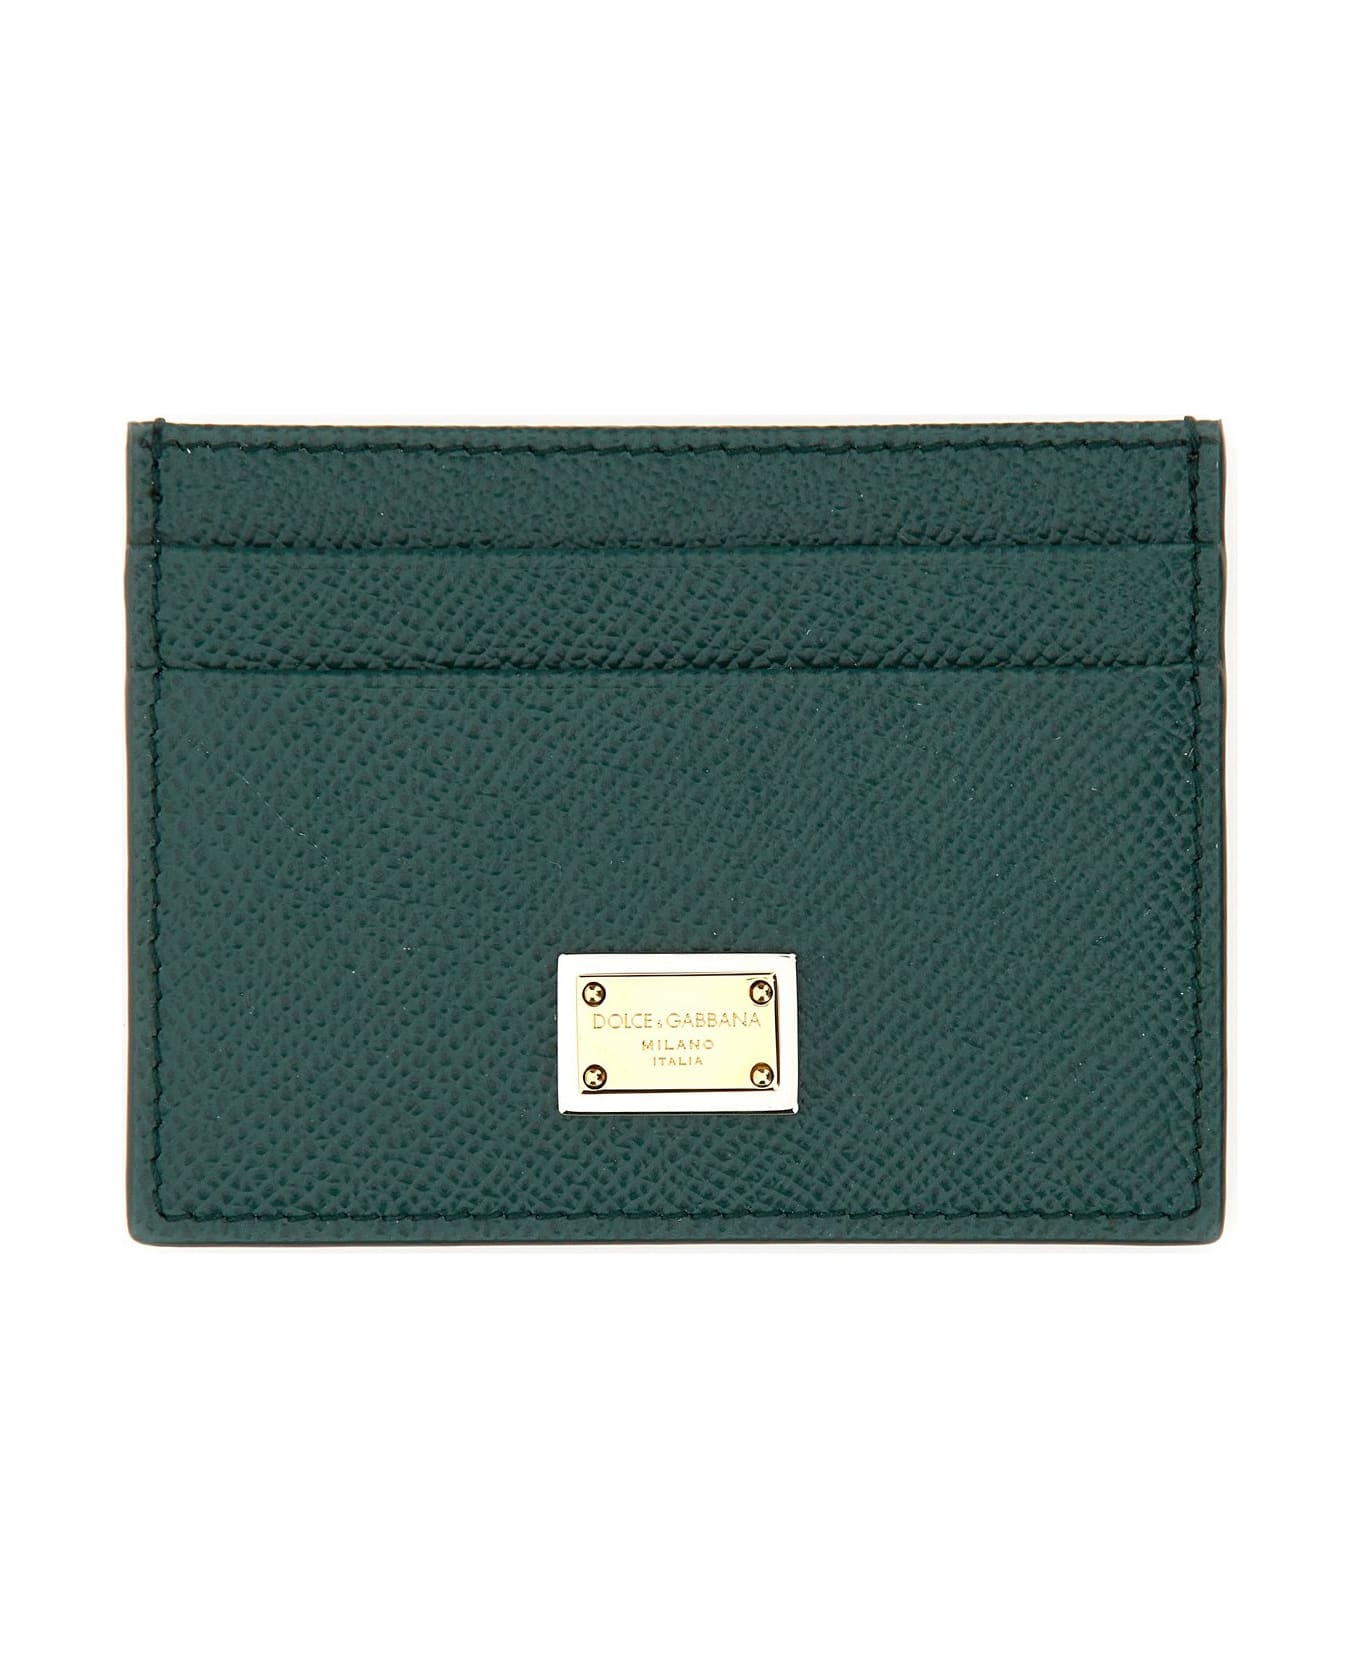 Dolce & Gabbana Leather Card Holder - VERDE